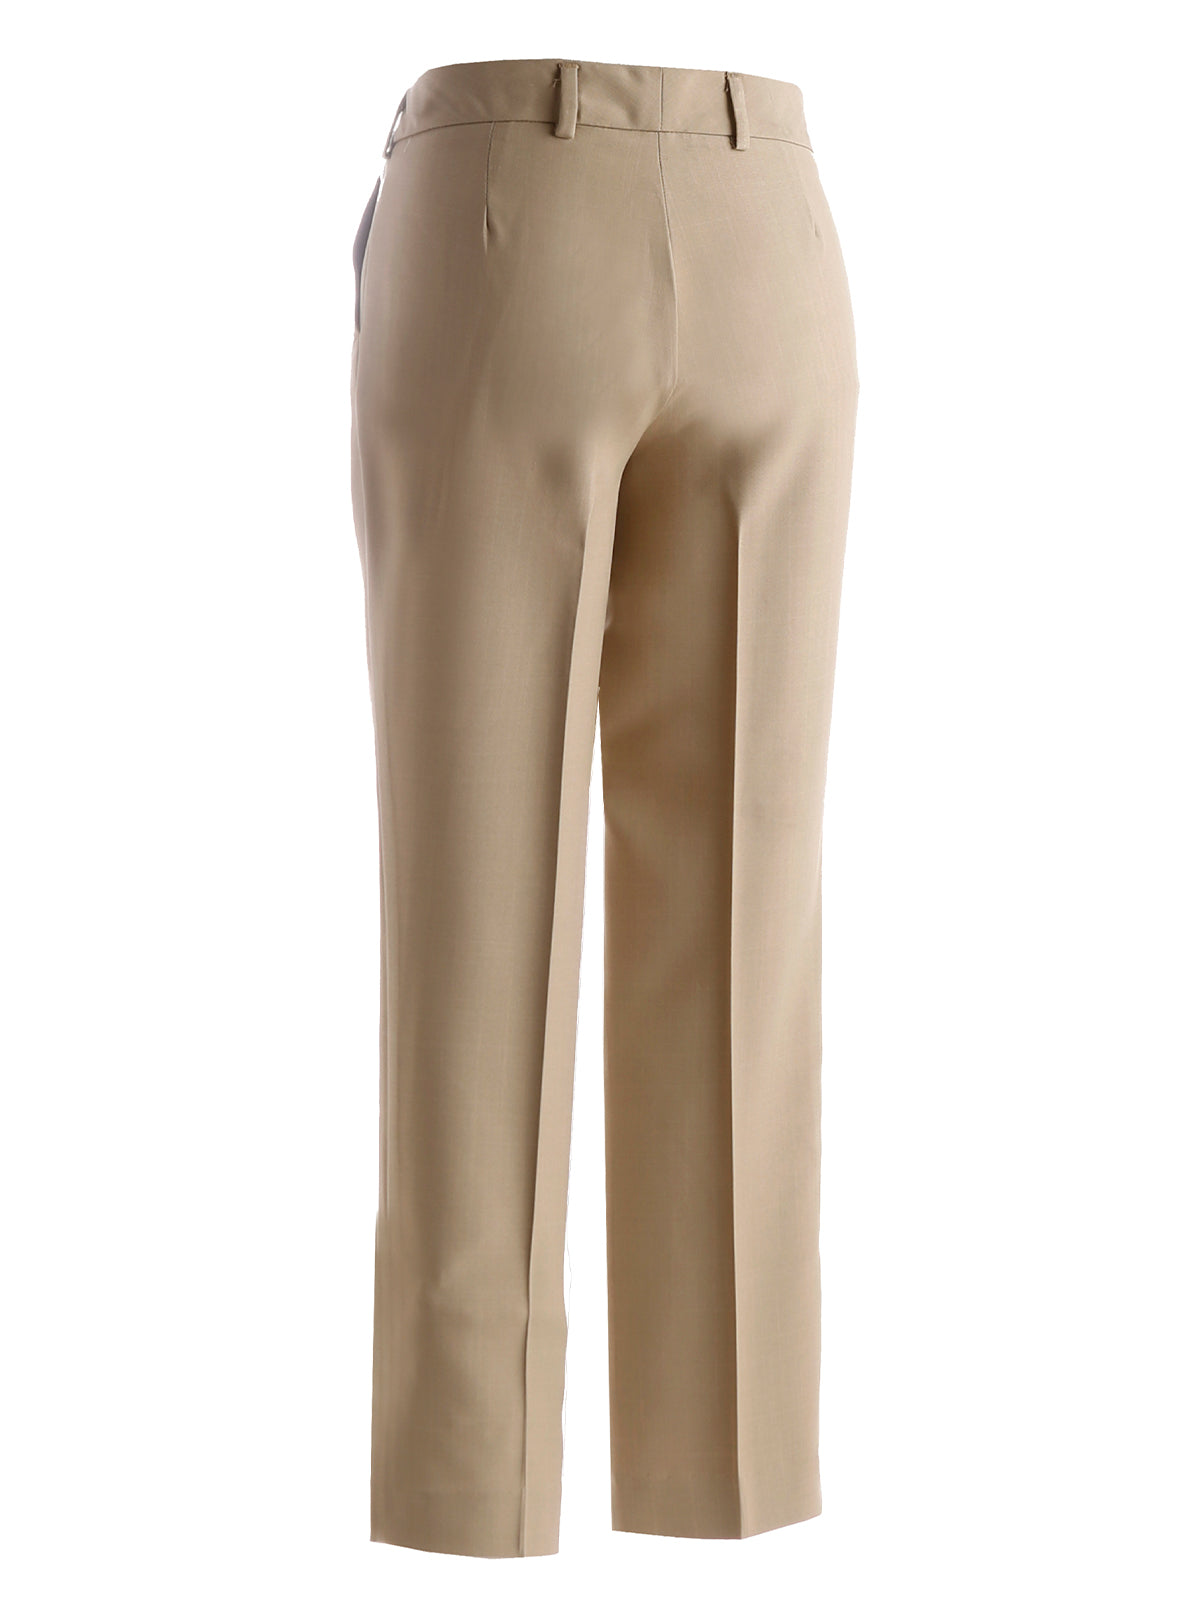 Women's Flat Front Pant - 8760 - Vintage Khaki